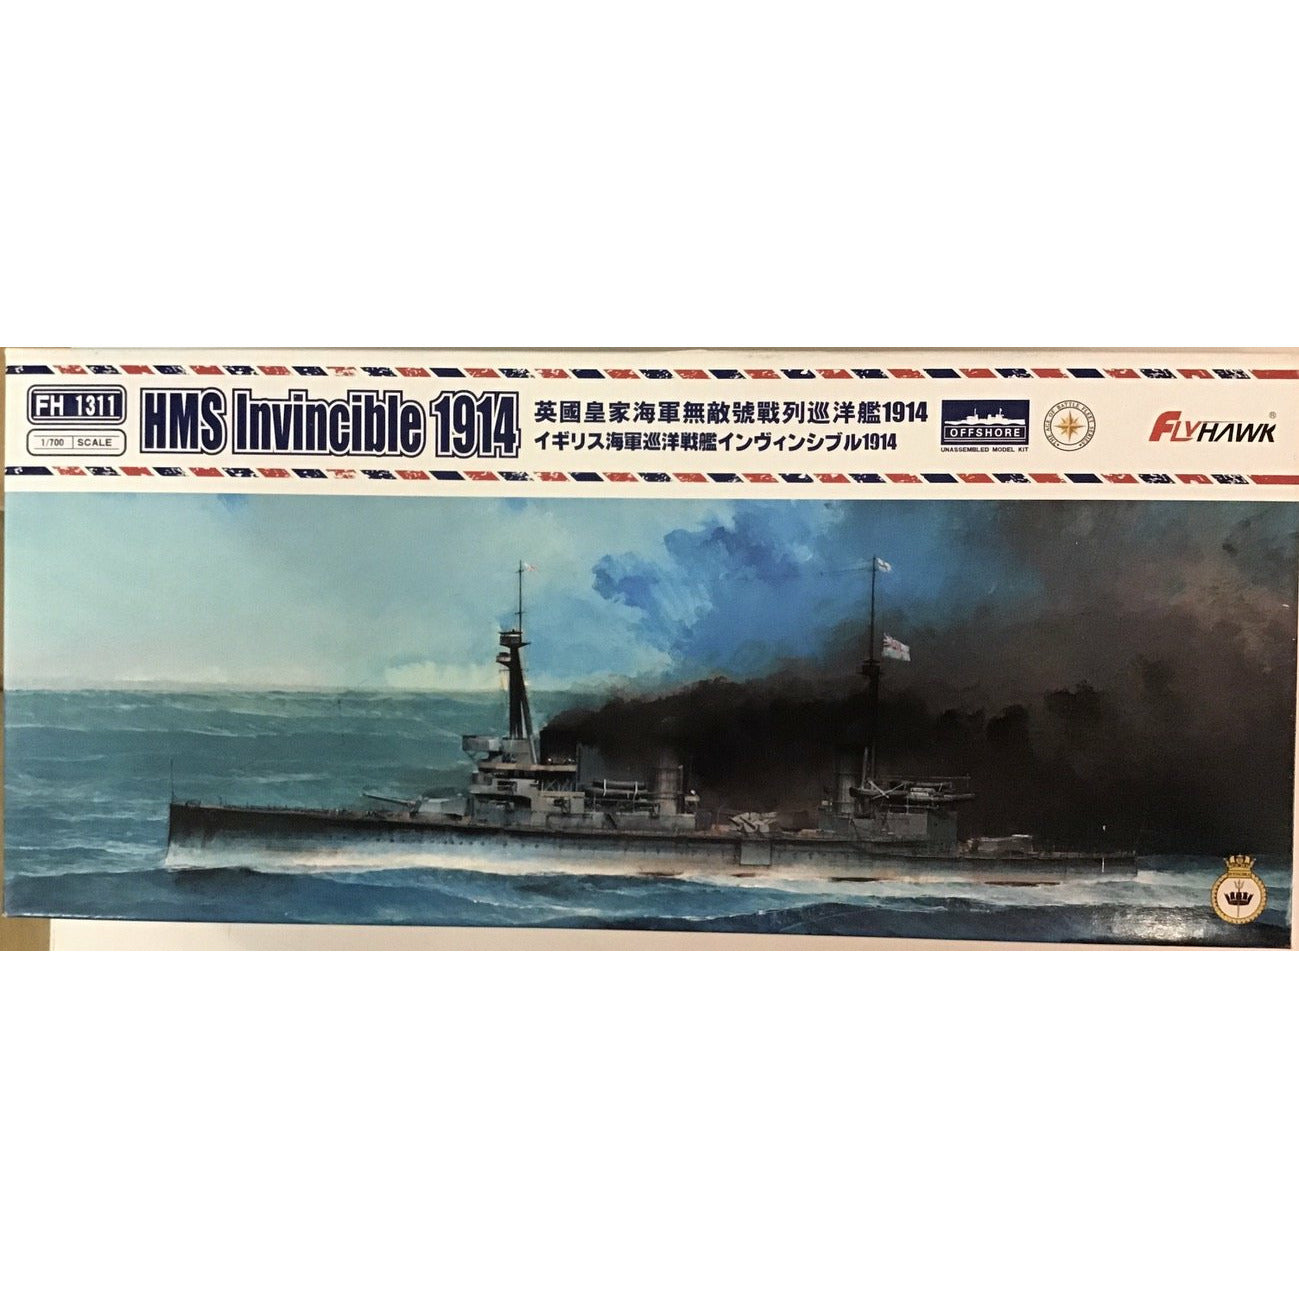 HMS Invincible 1914 1/700 Model Ship Kit #1311 by Flyhawk